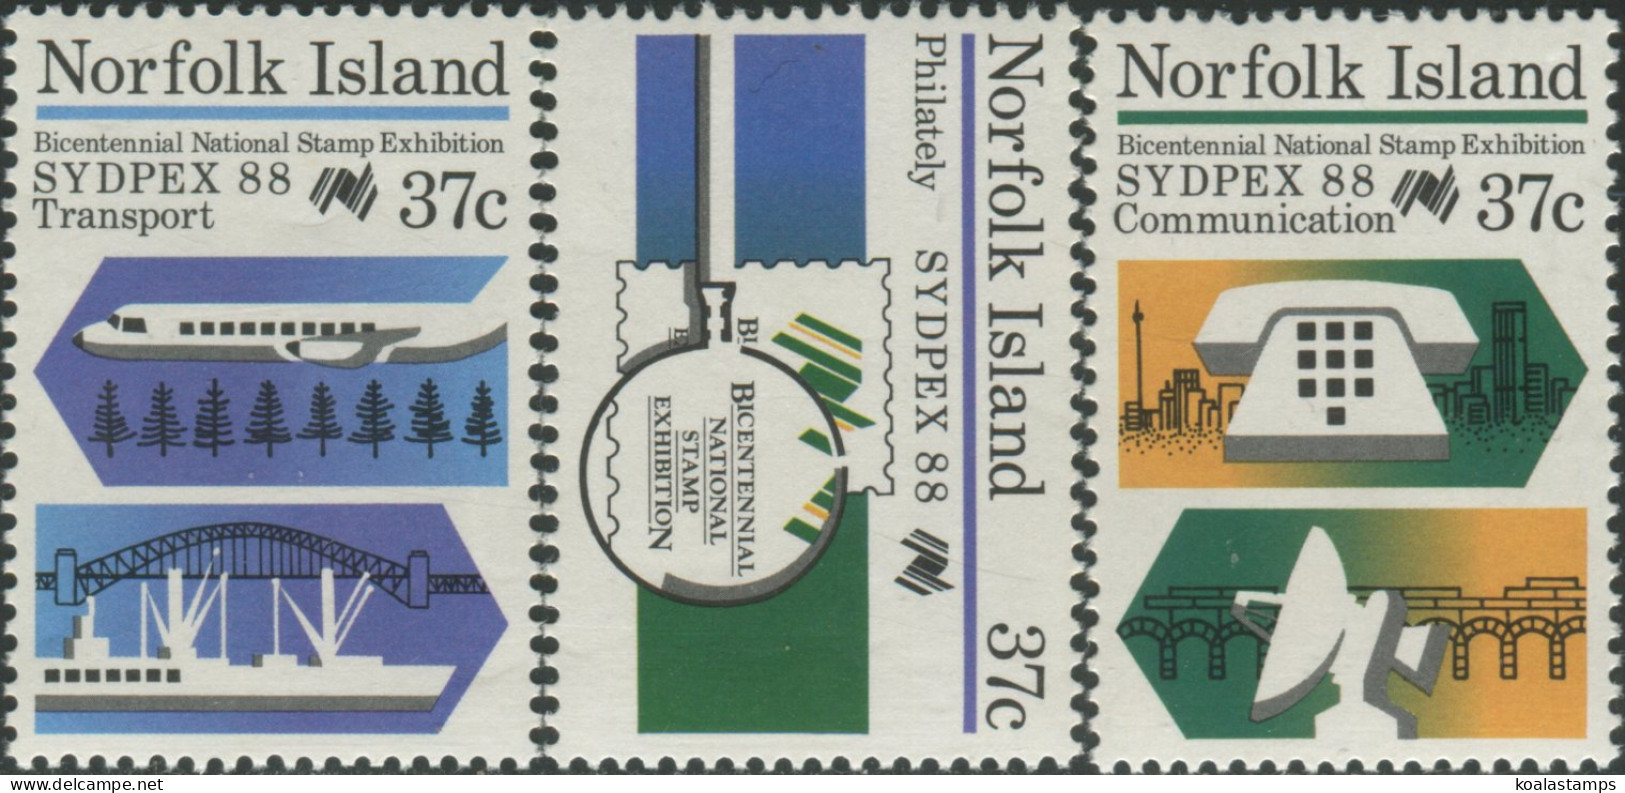 Norfolk Island 1988 SG444-446 Sydpex Stamp Exhibition Set MNH - Norfolkinsel